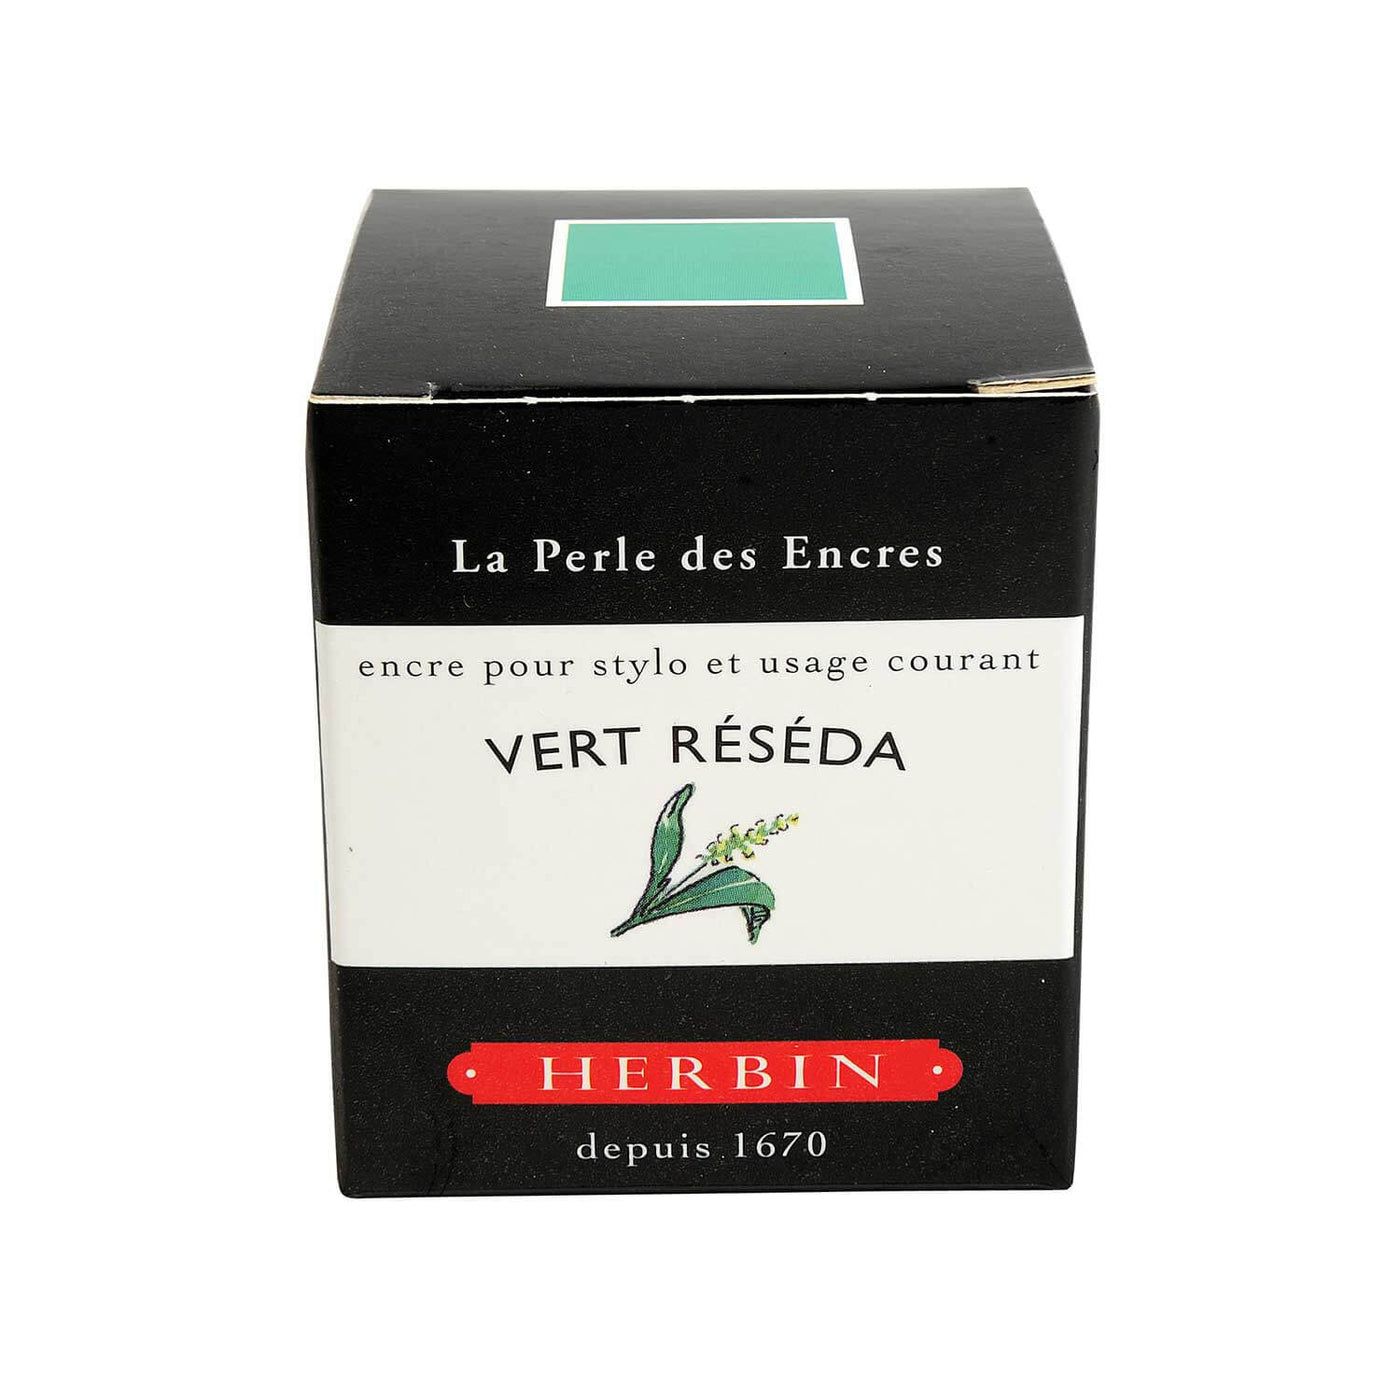 J Herbin "D" Series Ink Bottle Vert Reseda (Turquoise) - 30ml 2